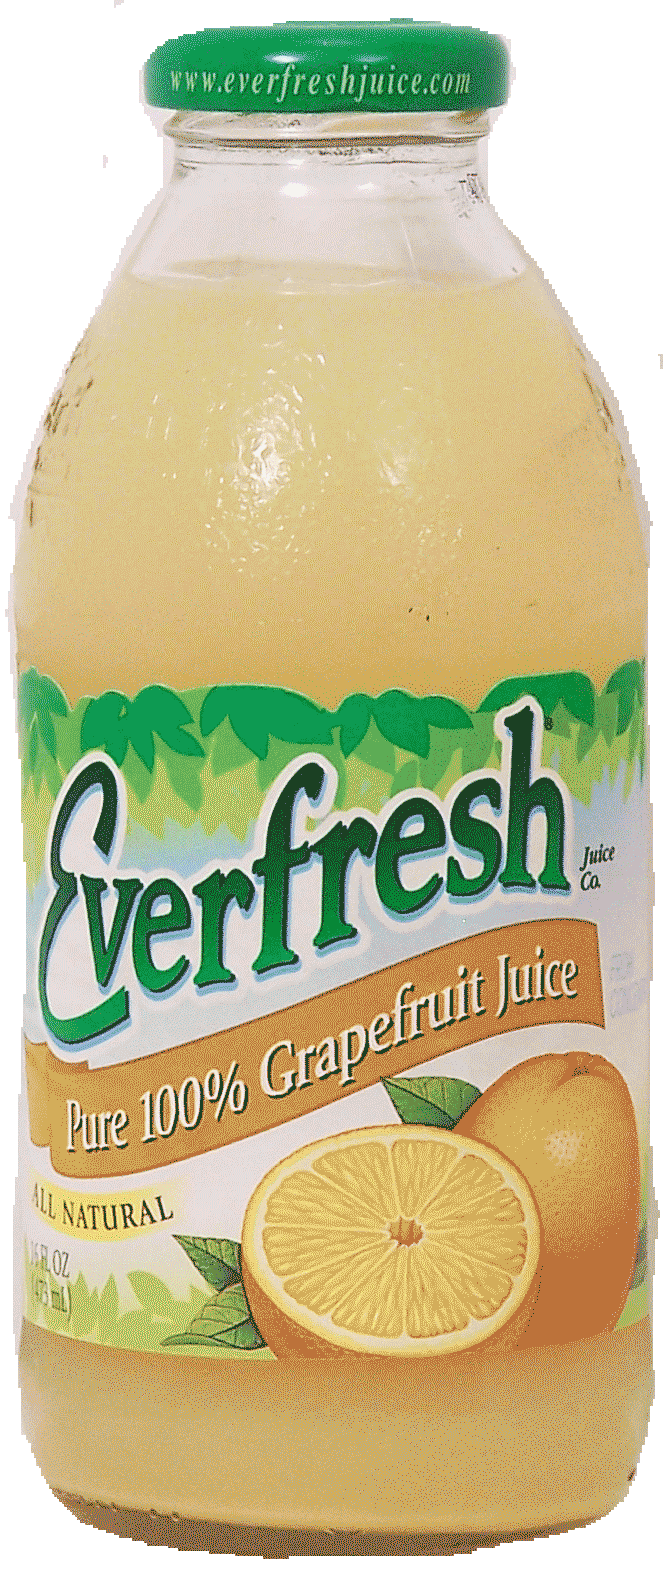 Everfresh  pure 100% grapefruit juice Full-Size Picture